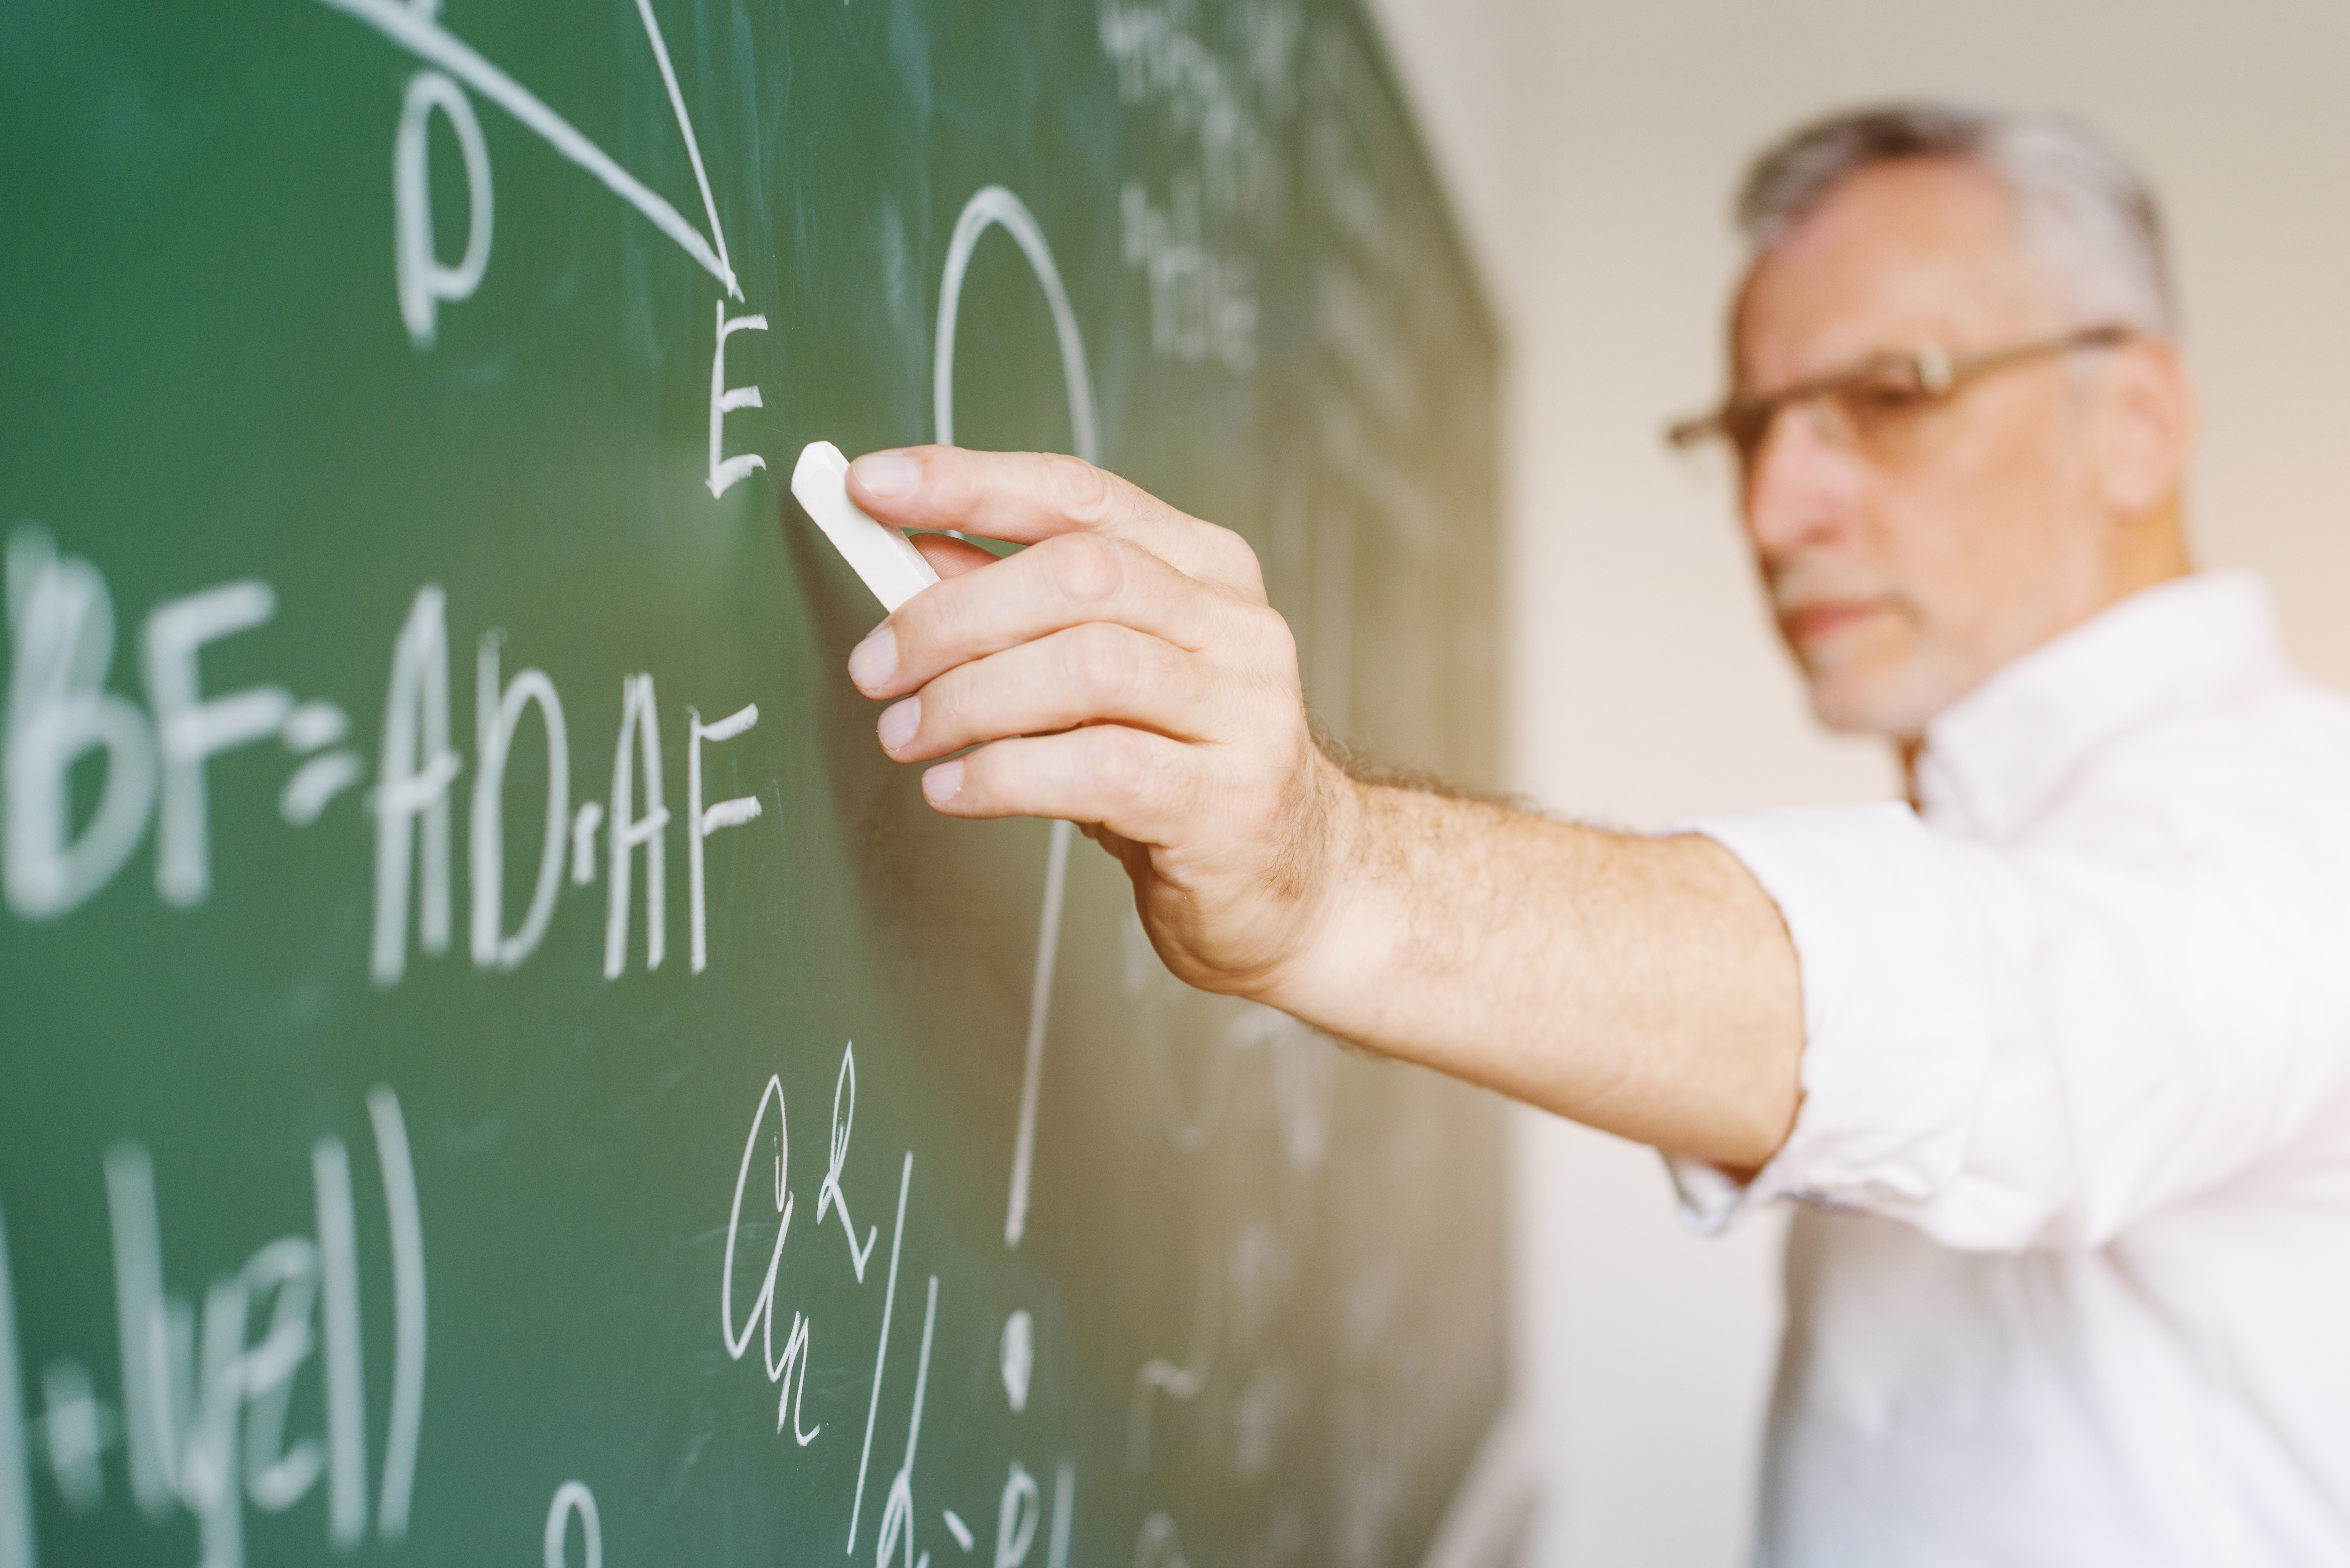 aged-math-teacher-writing-chalkboard